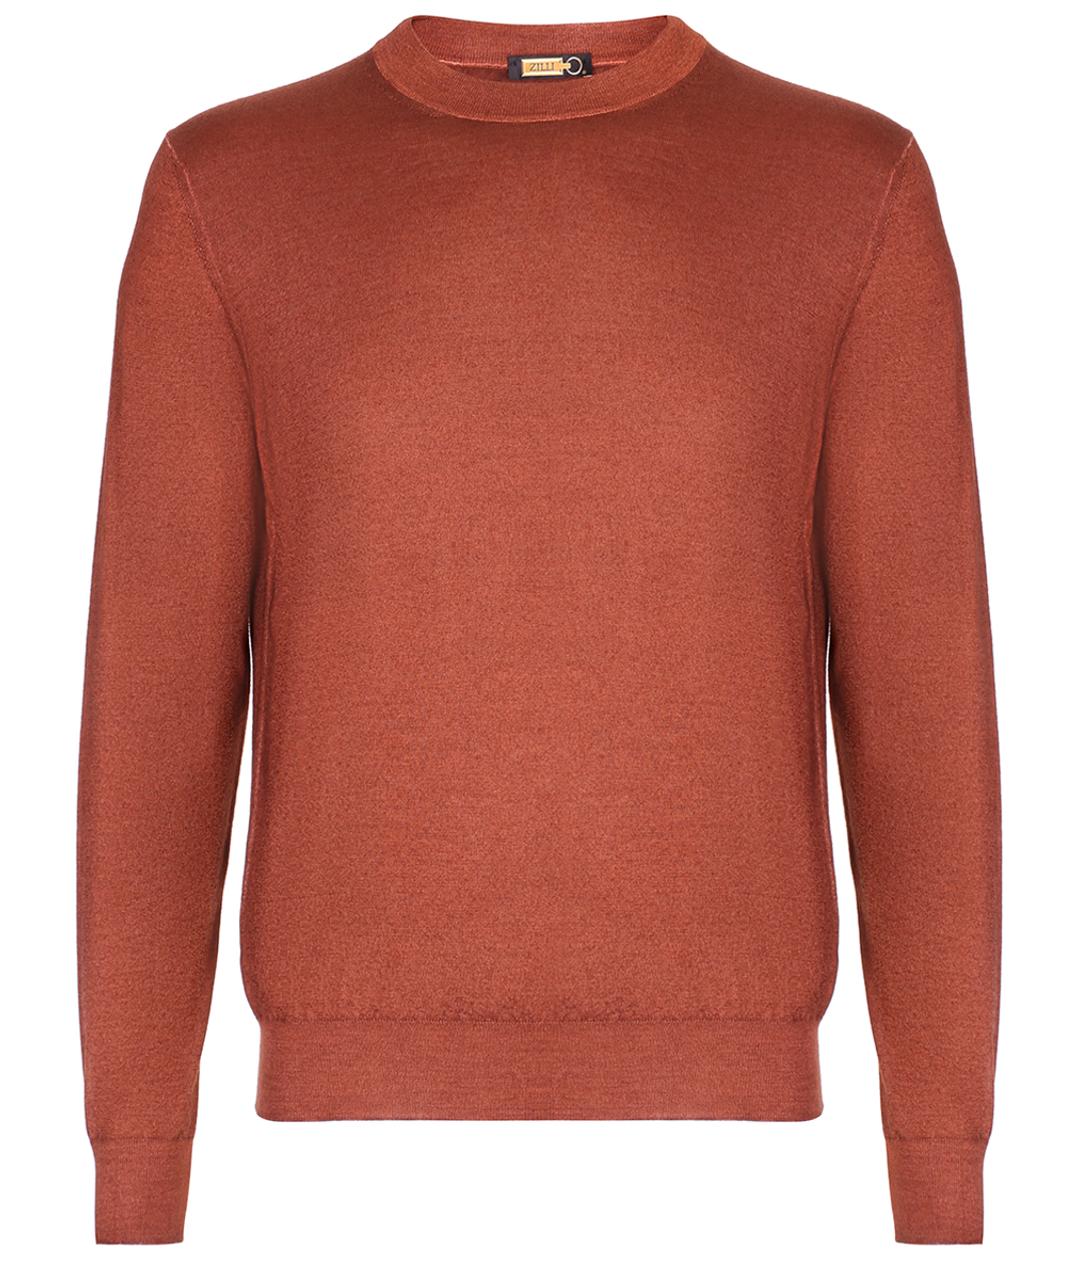 ZILLI Оранжевый джемпер / свитер, фото 1